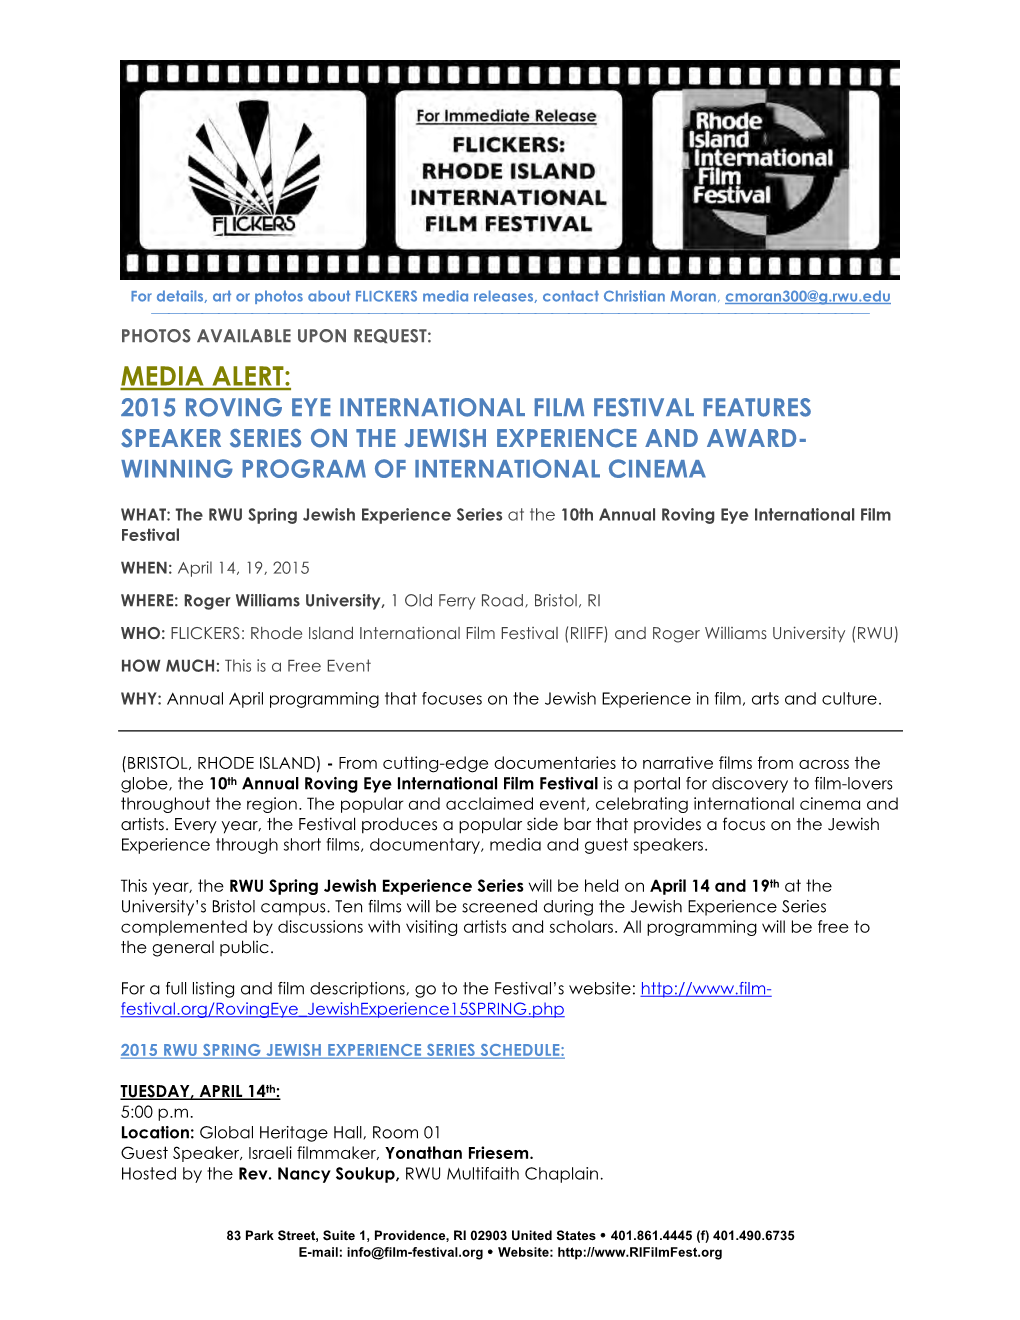 Media Alert: 2015 Roving Eye International Film Festival Features Speaker Series on the Jewish Experience and Award- Winning Program of International Cinema